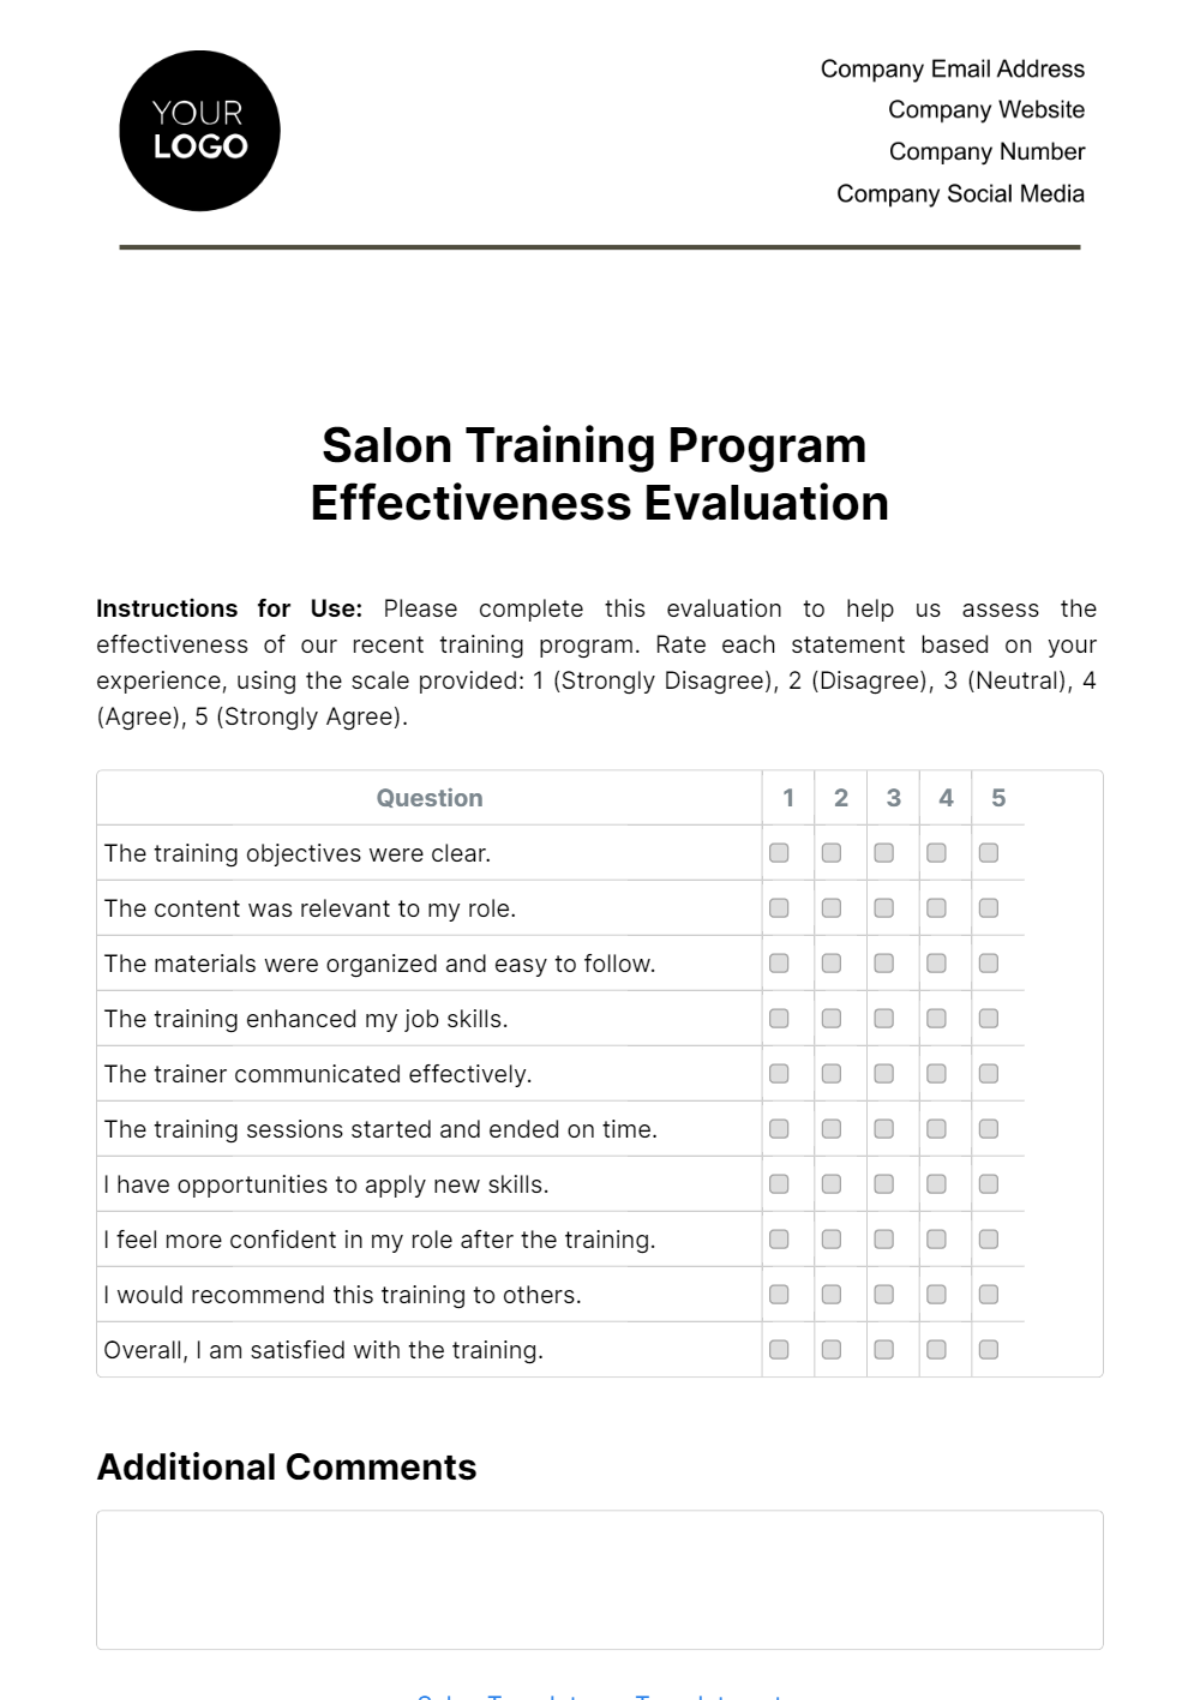 Free Salon Training Program Effectiveness Evaluation Template